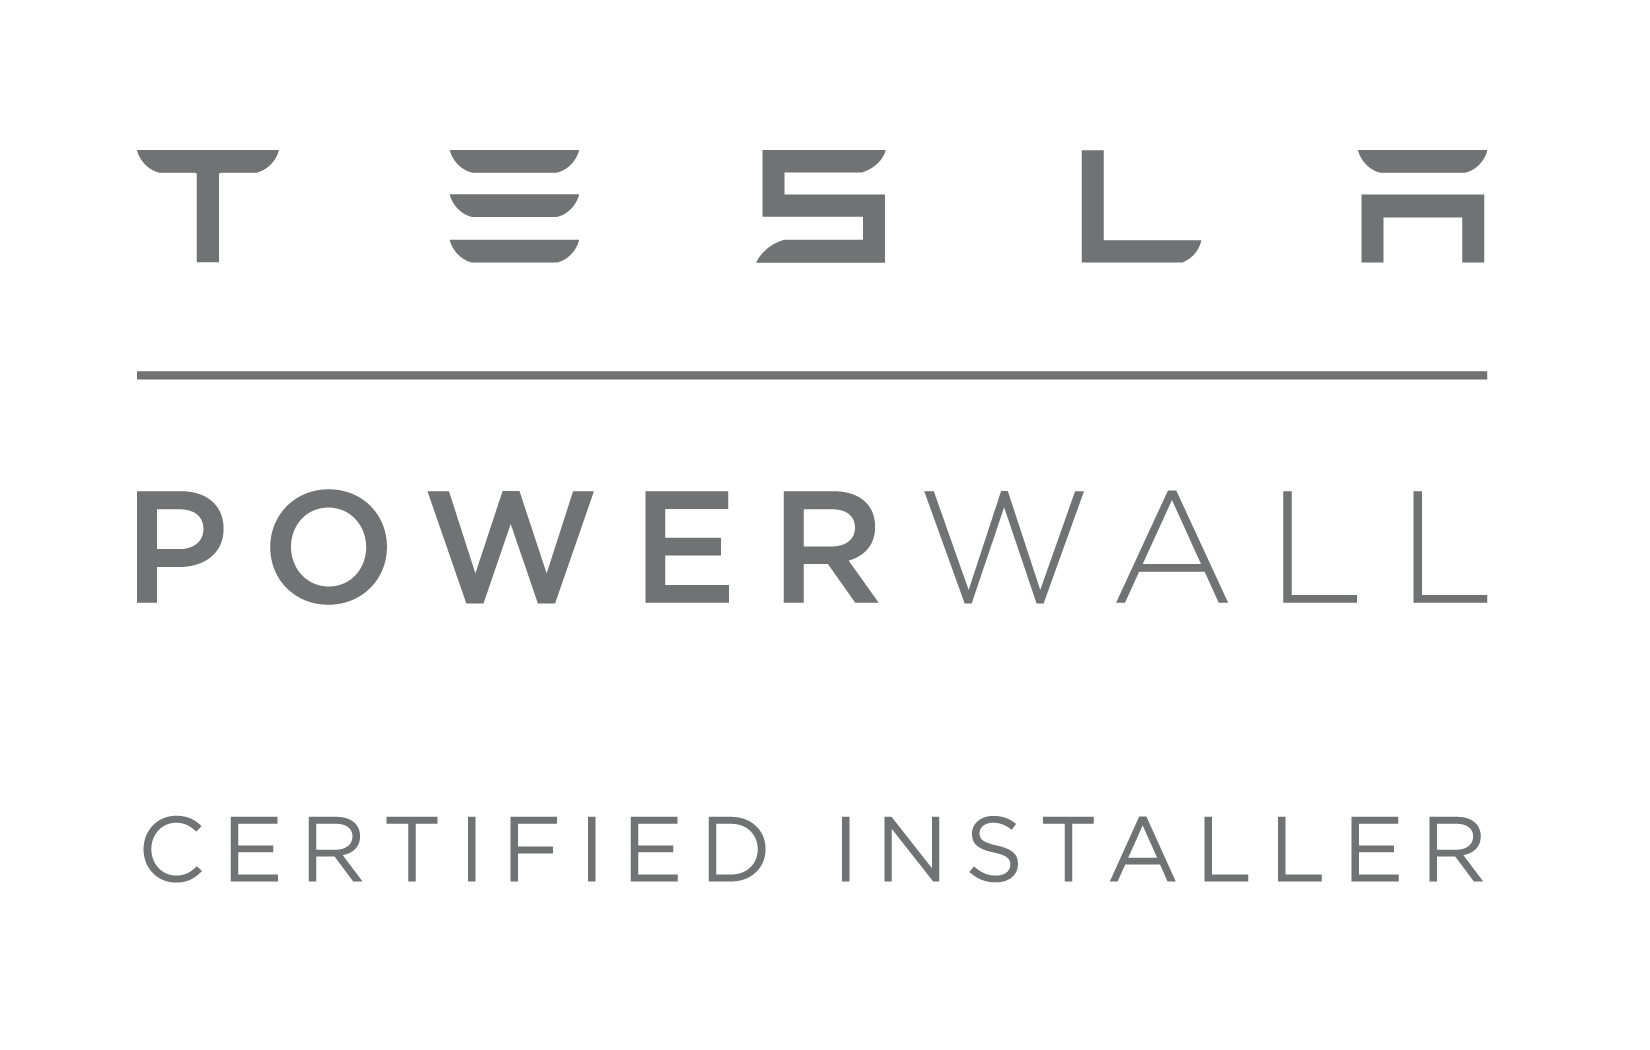 Tesla Powerwall Certified Installers